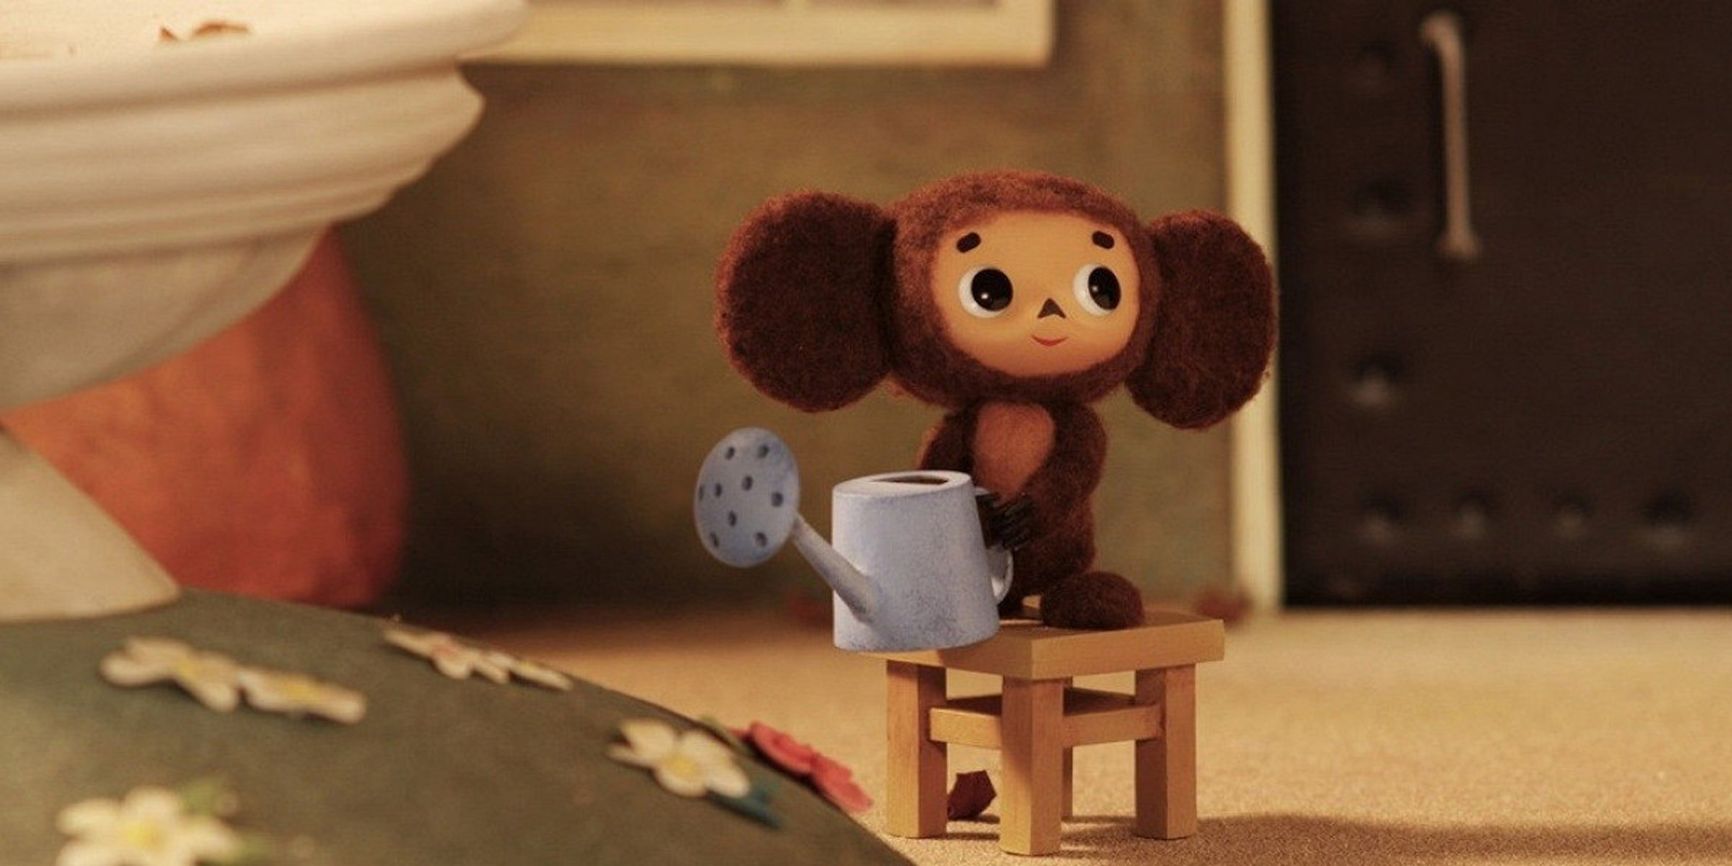 A shot from the movie “Cheburashka”